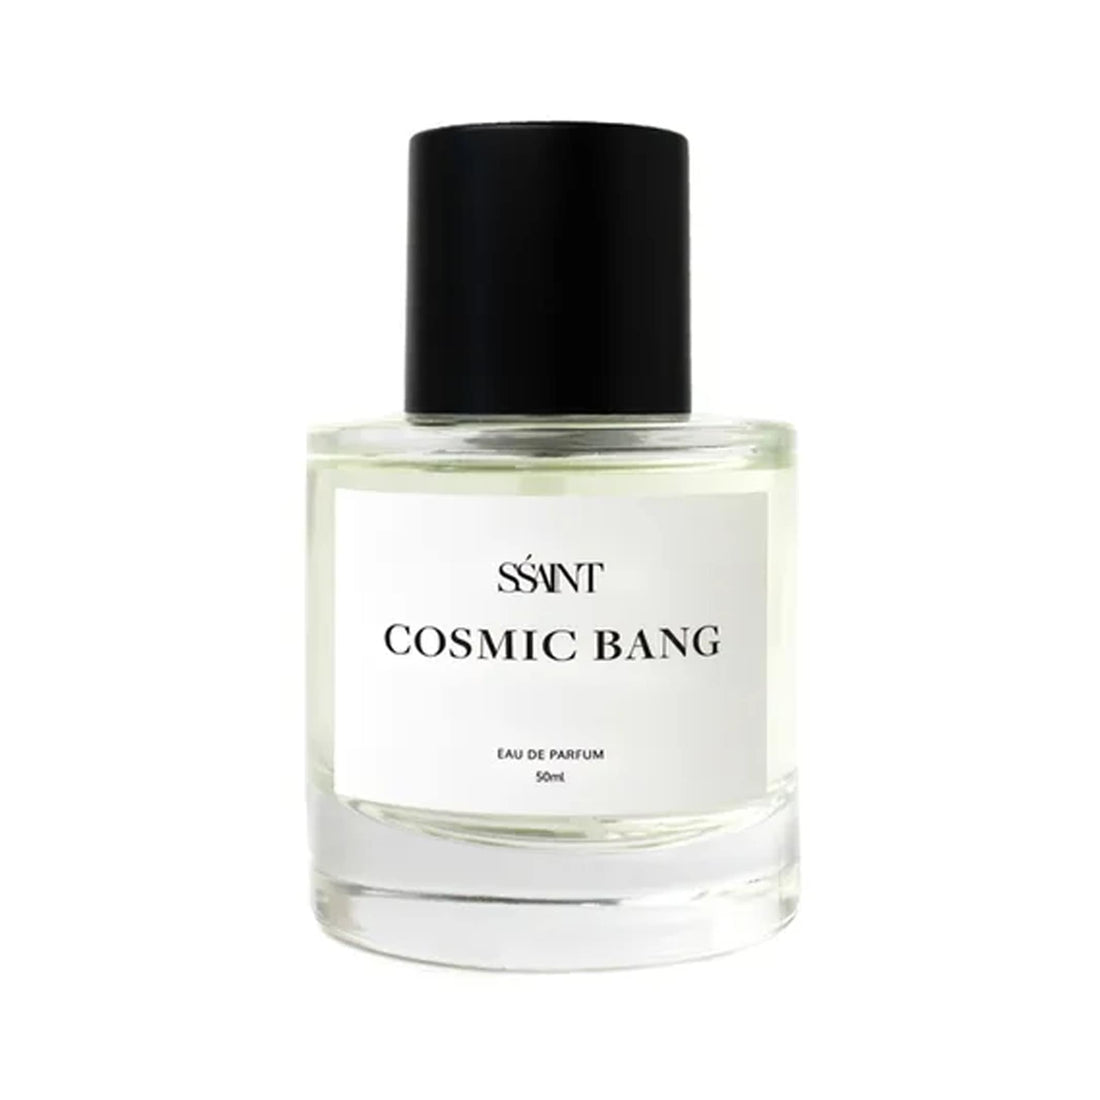 SŚAINT Parfum Cosmic Bang 50ml